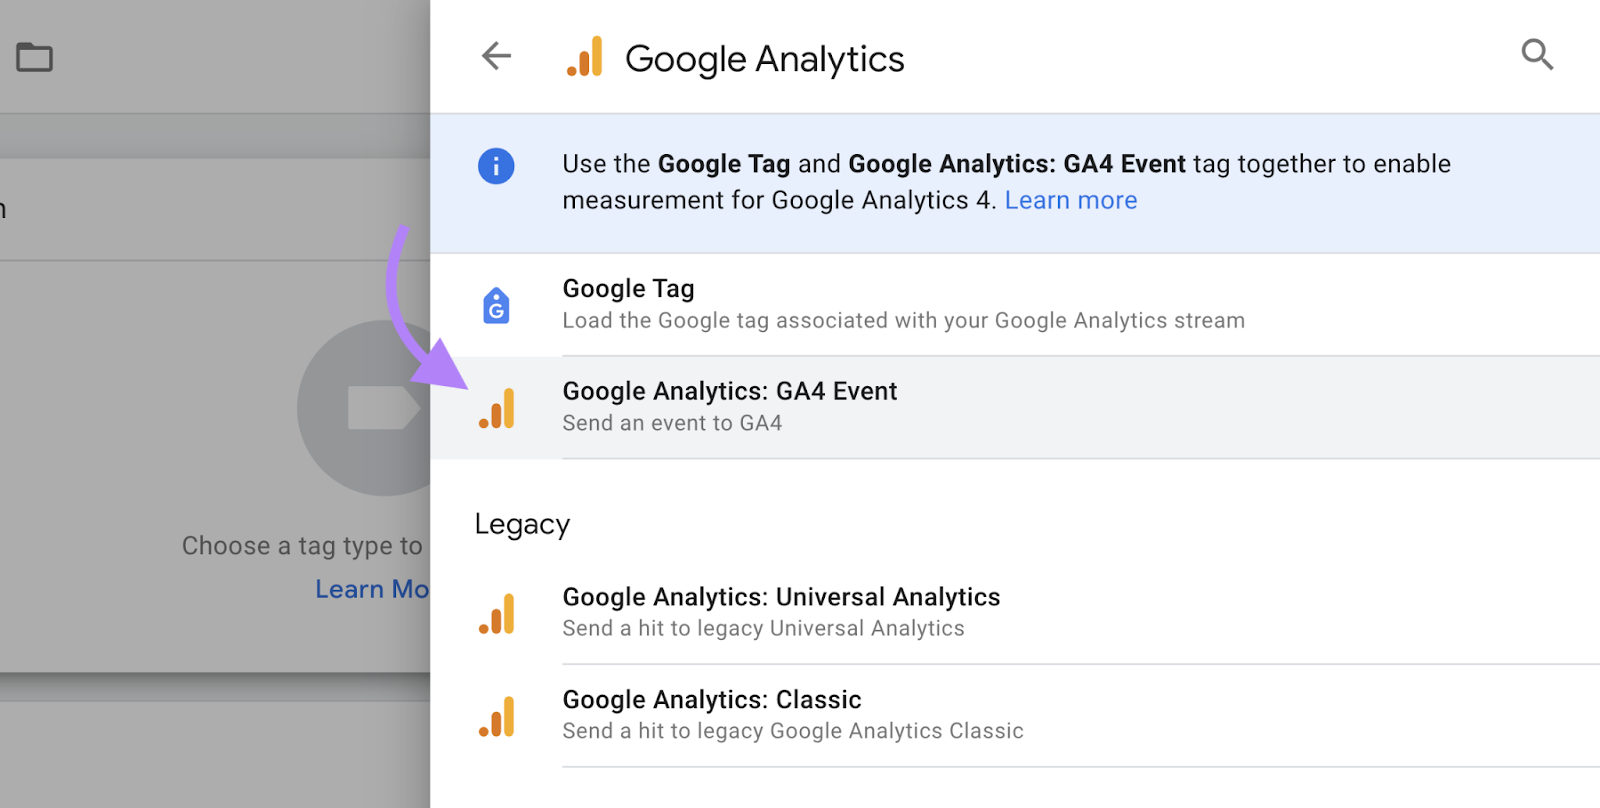 “Google Analytics: GA4 Event" selected under "Google Analytics" menu